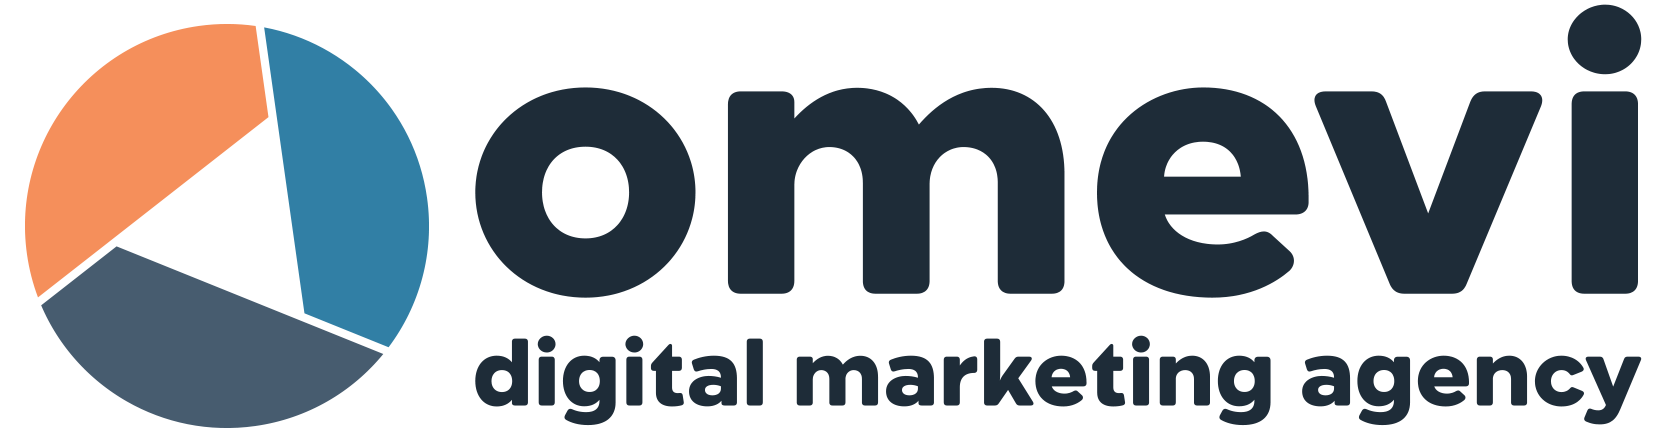 Omevi Digital Logo 2